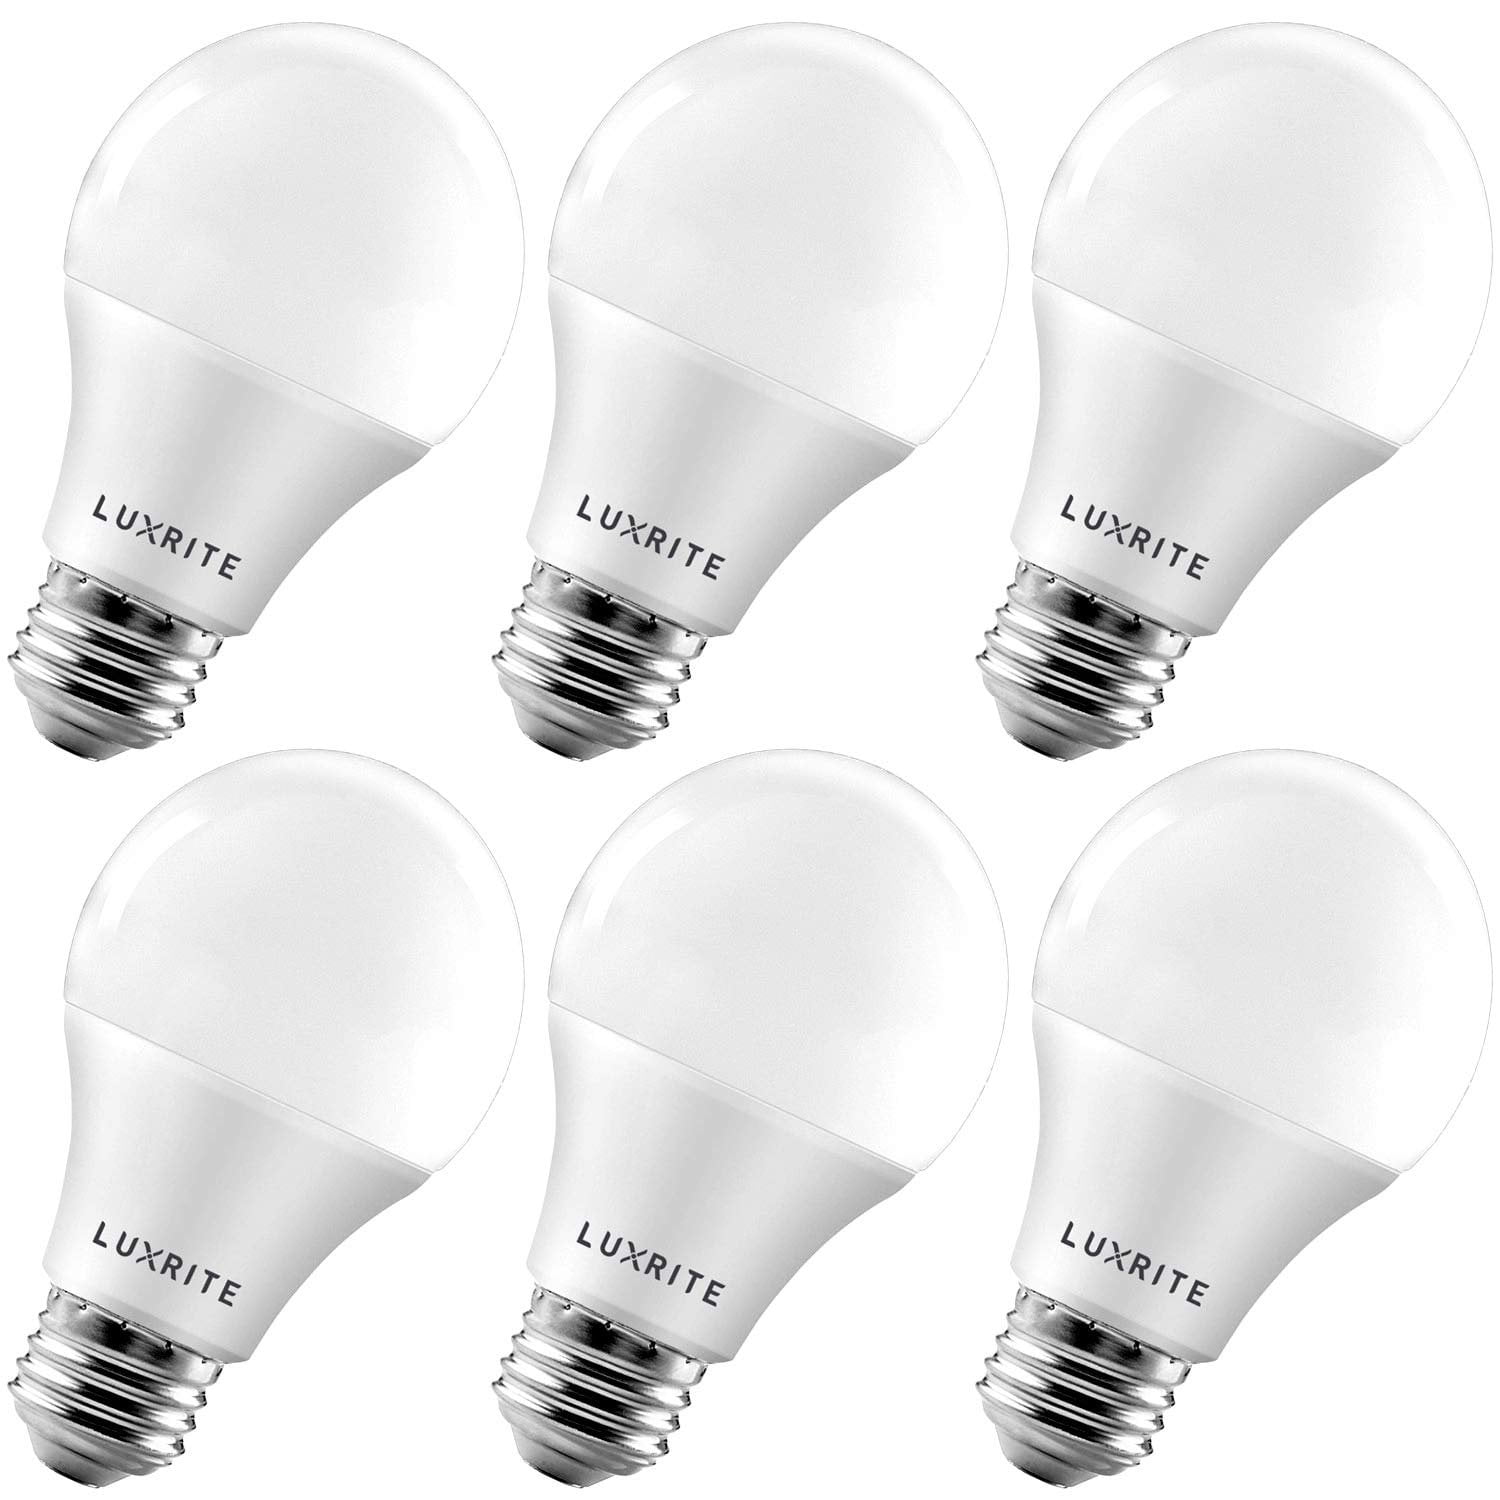 Luxrite A19 Dimmable Light Bulb 9W (60W Equivalent) 5000K Bright White, 800 Lumens, E26, 6 Pack - Walmart.com